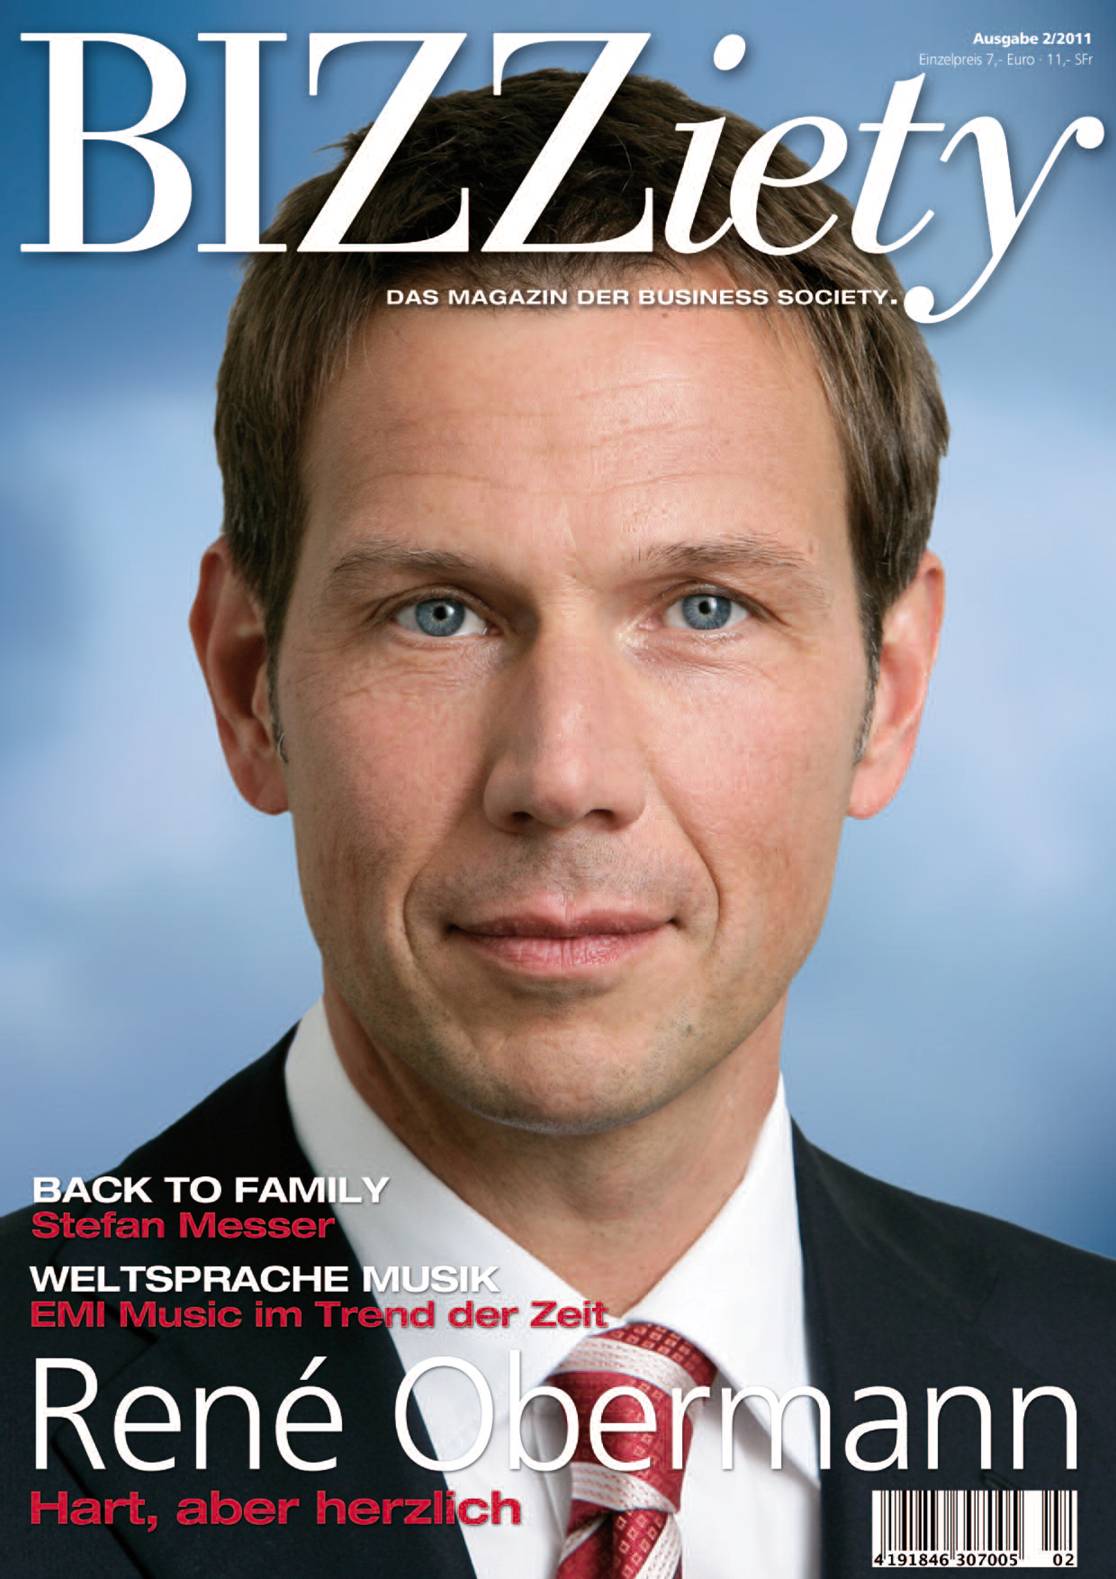 Deutsche-Politik-News.de | Fromm  Global Media Verlags GmbH